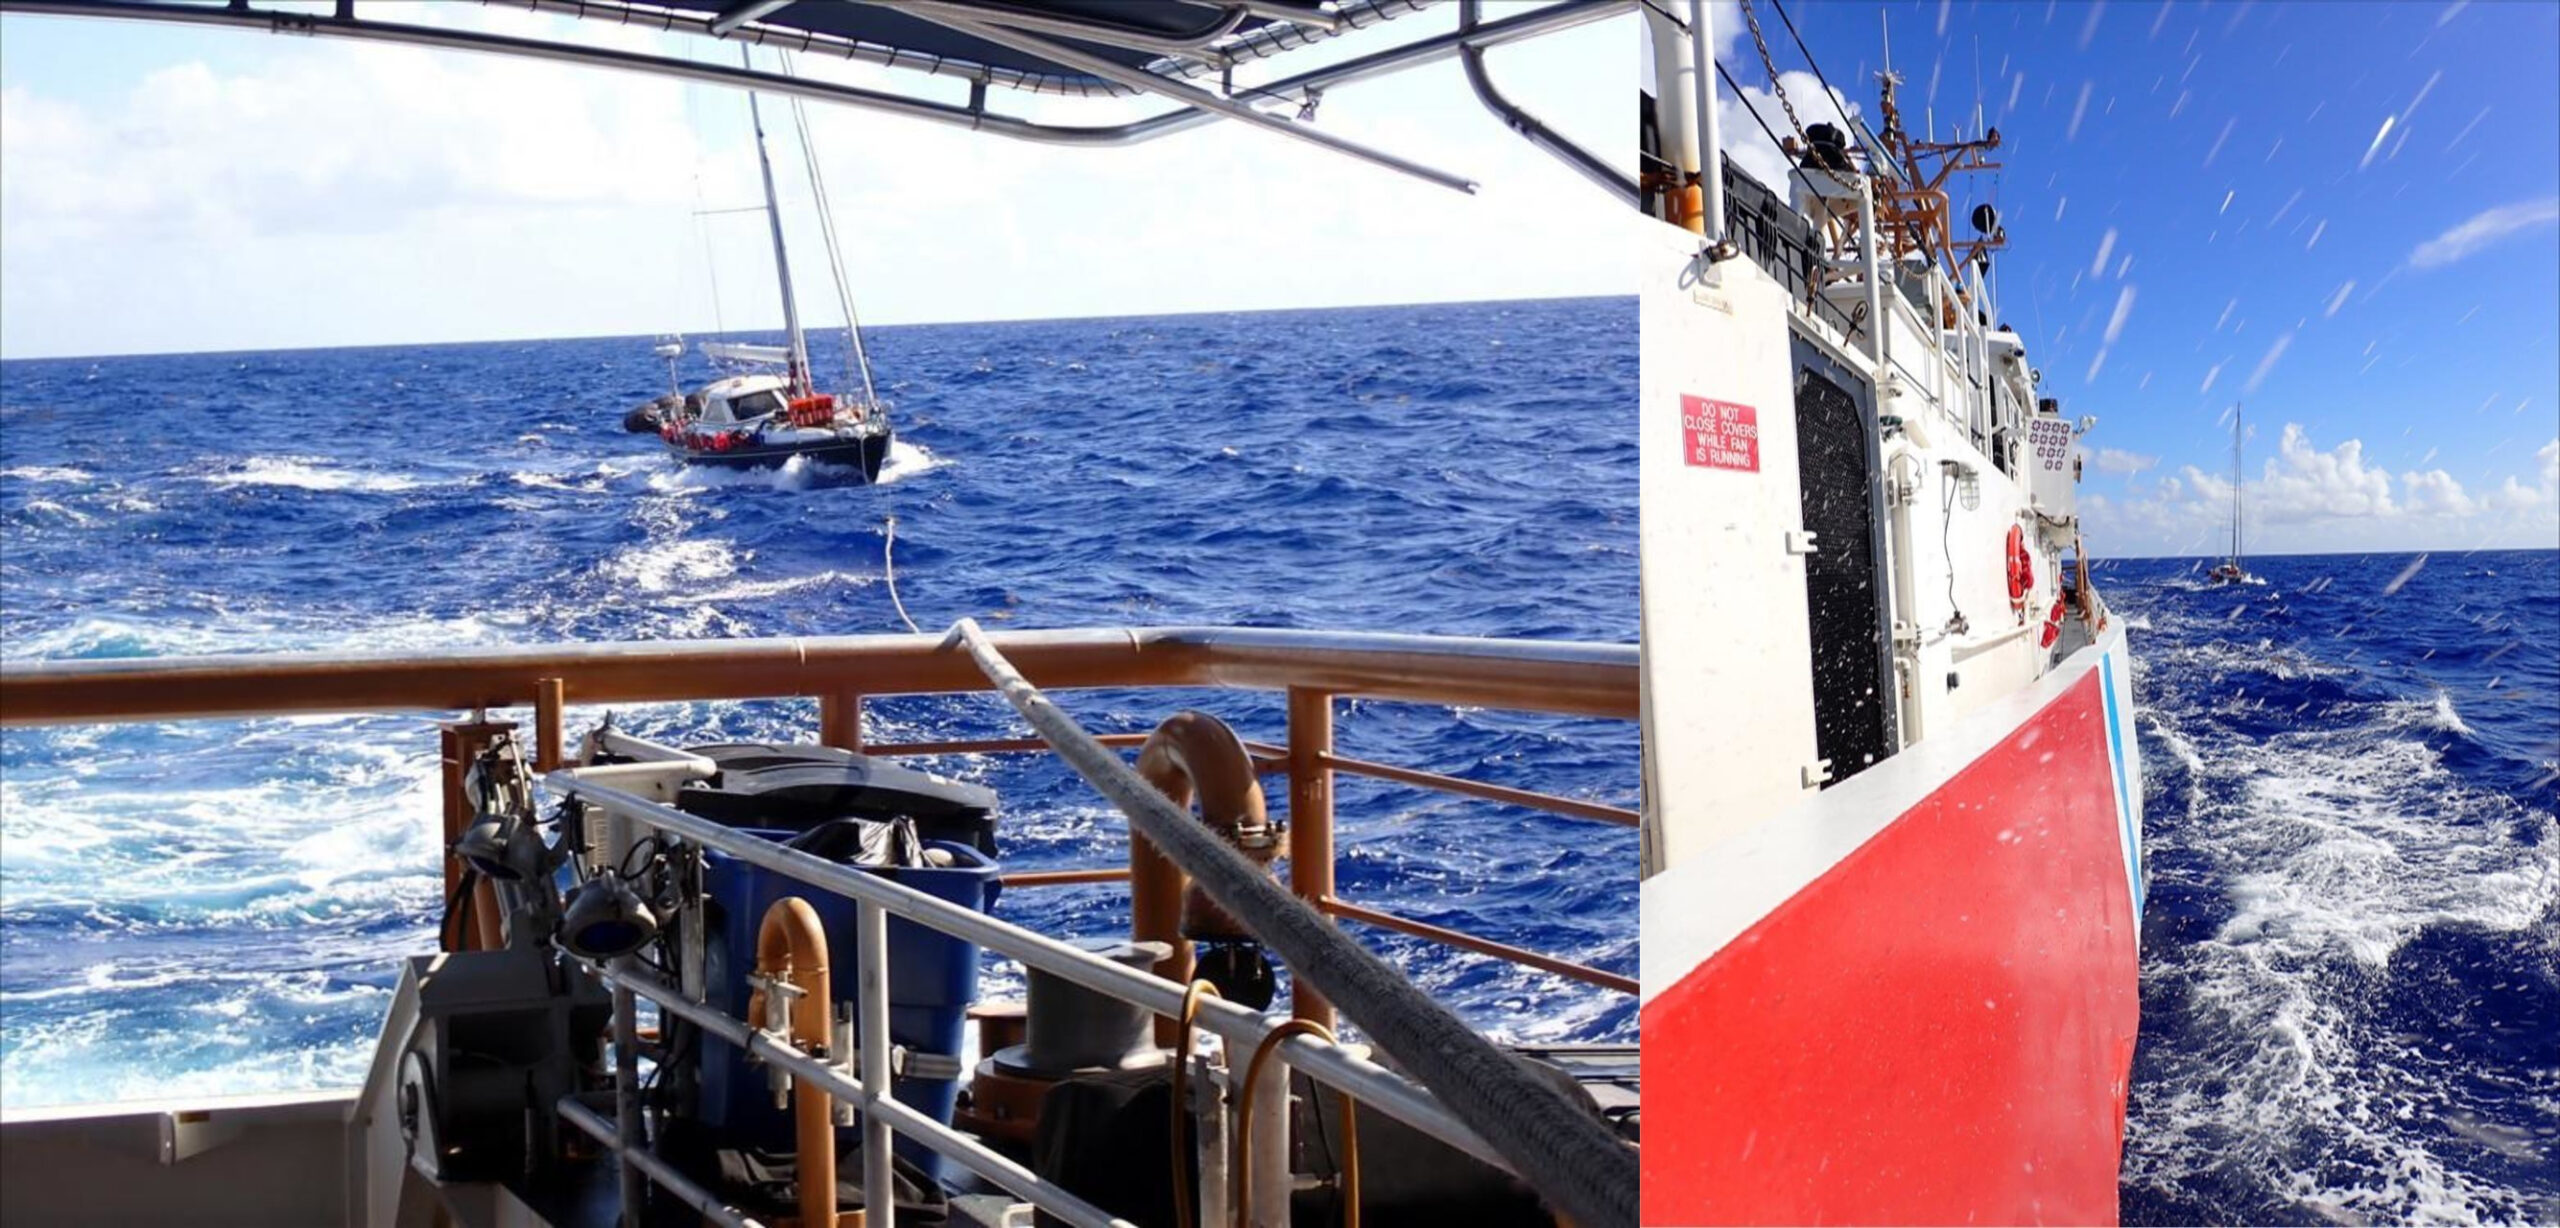 Coast Guard Crews Rescue 3 U.S. Mariners From Distressed Sailing Vessel In Atlantic Ocean